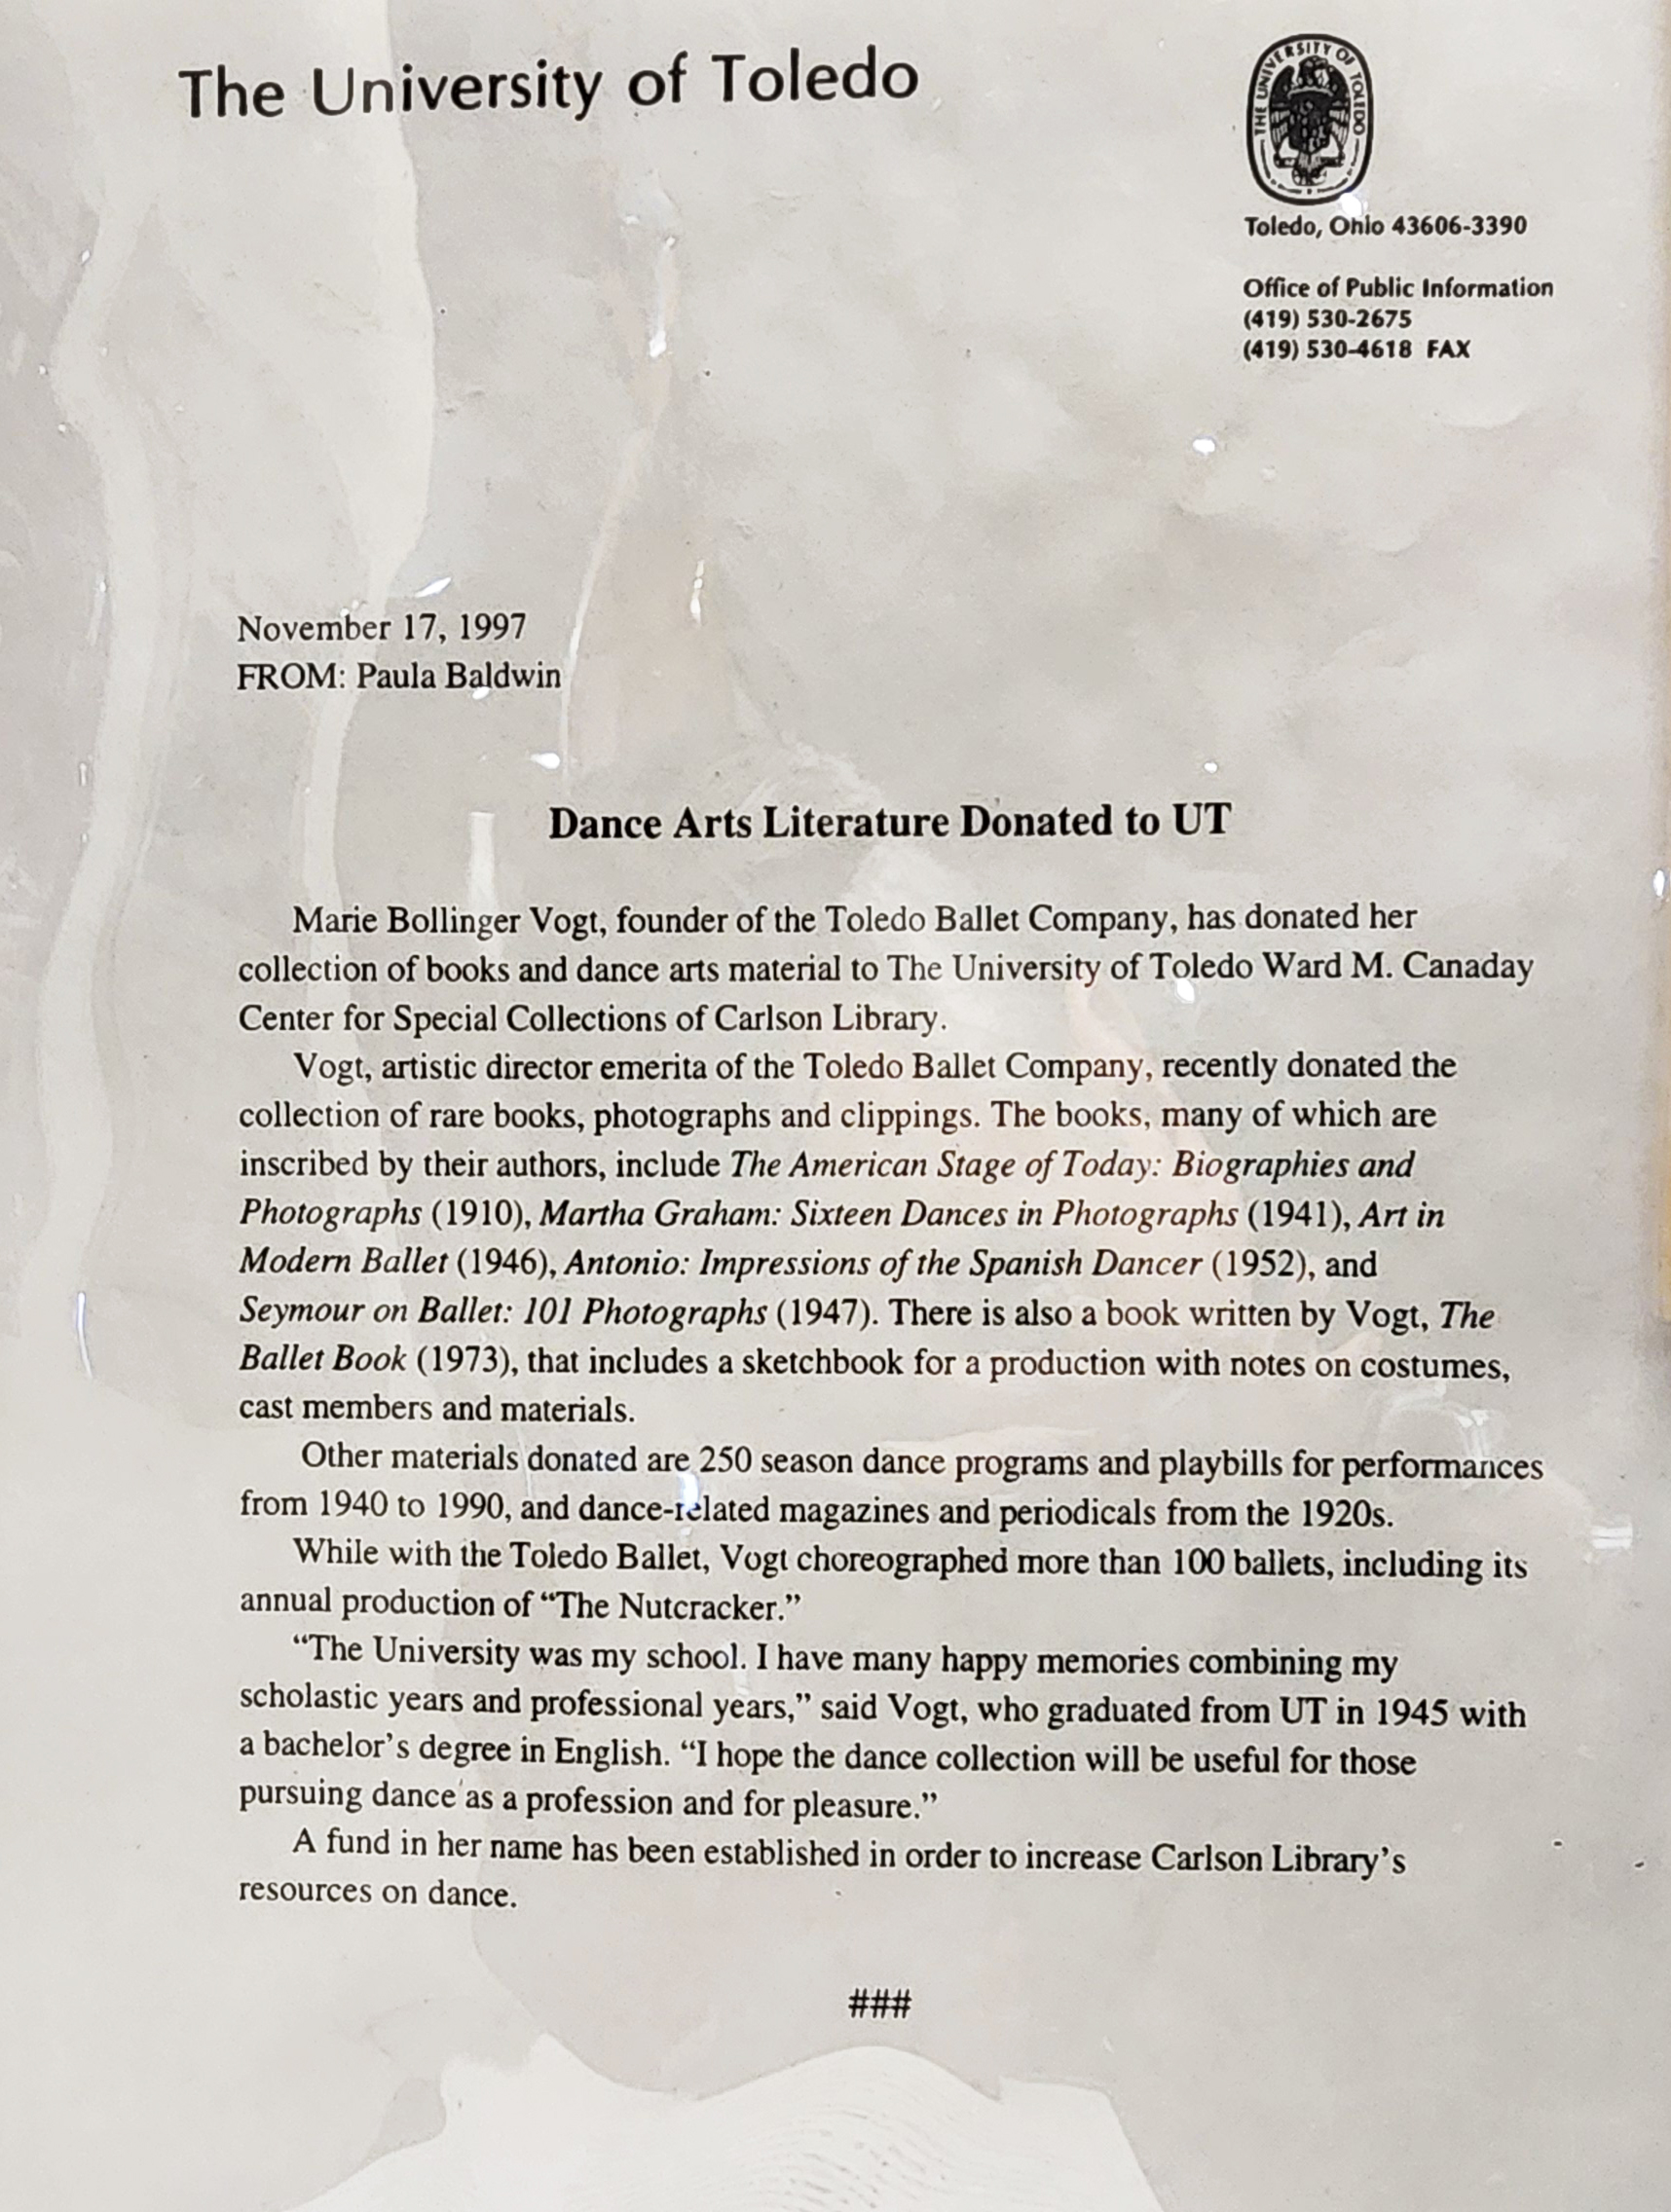 Press release: Dance Arts Literature Donated to UT (November 17, 1997)